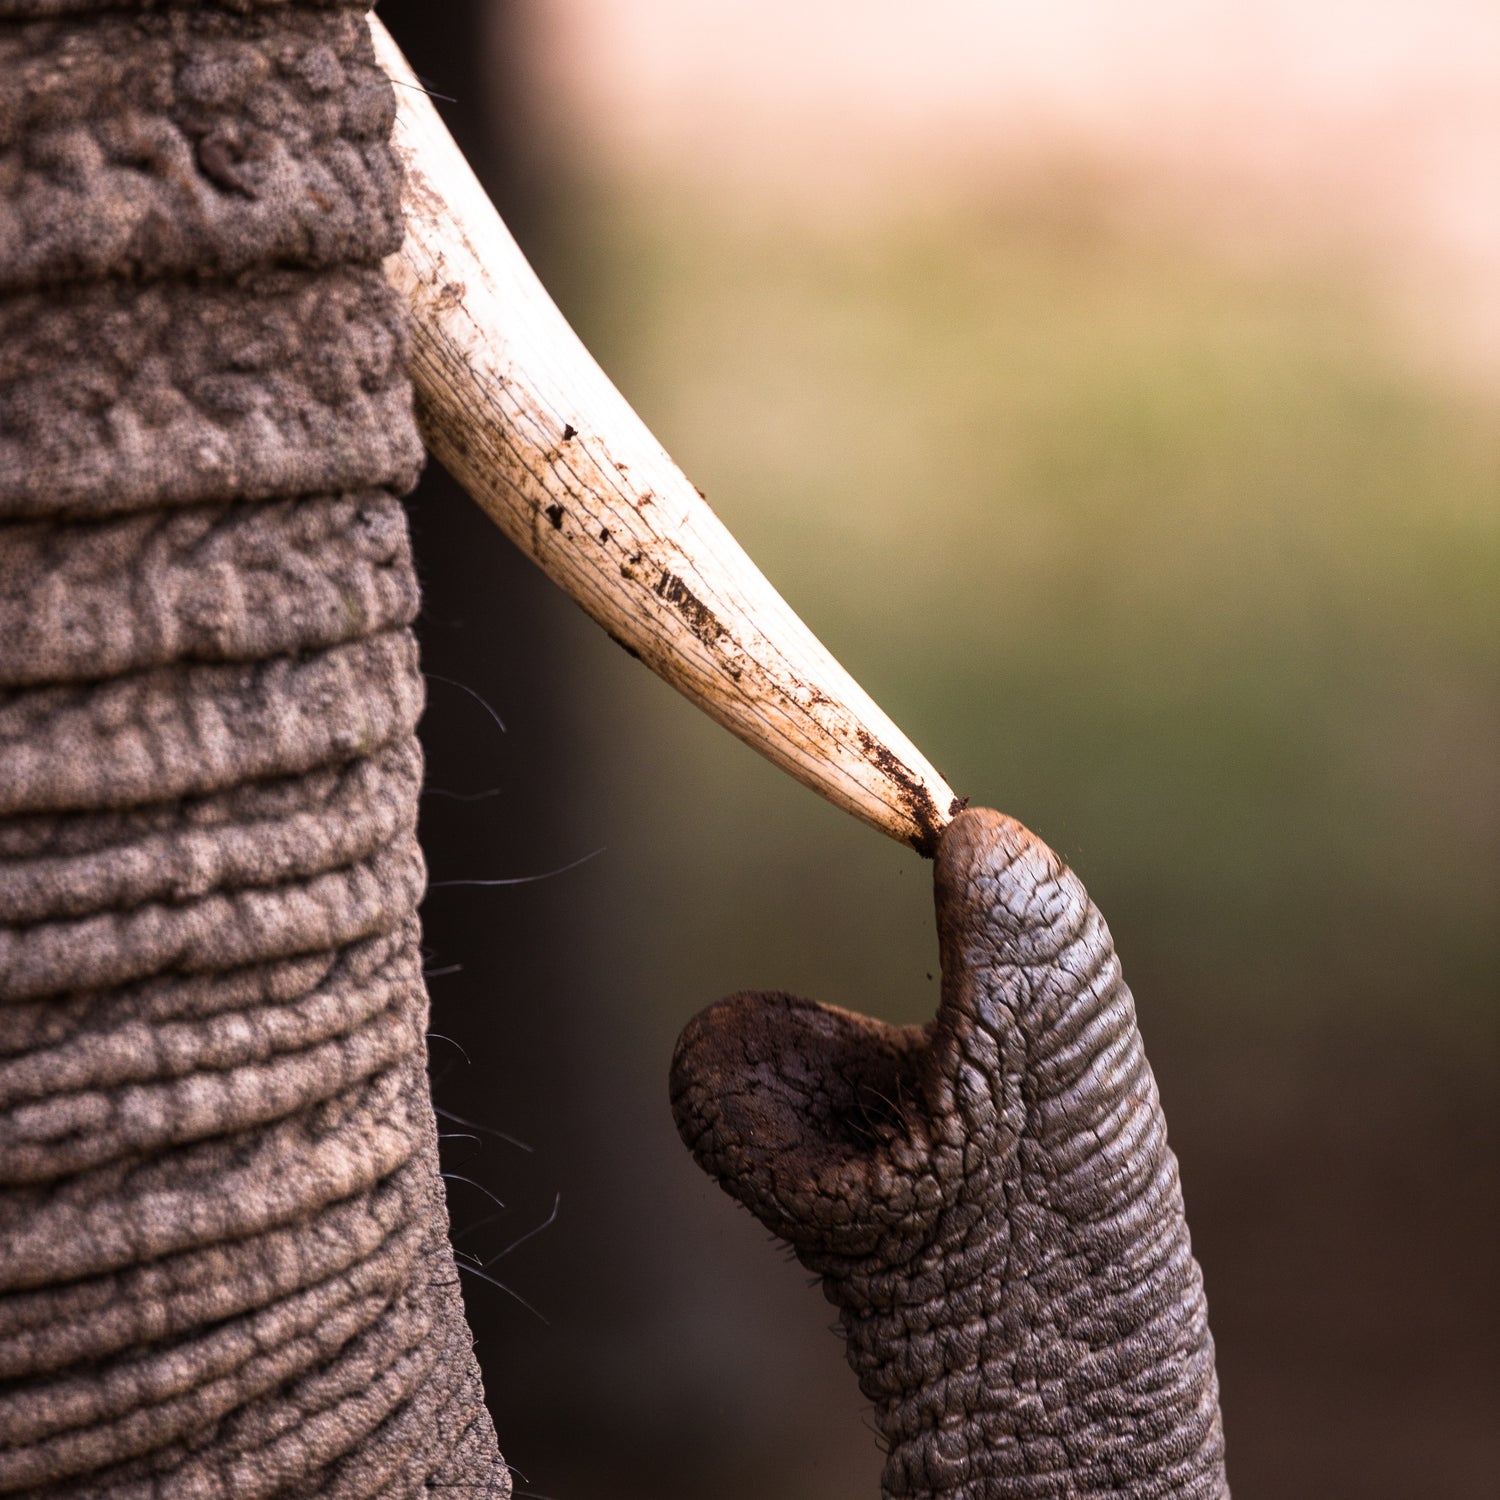 elephant touching its trunk to its ivory tusk - Connected Clothing Company donates 10% to David Sheldrick Wildlife Trust conservation and orphanage efforts